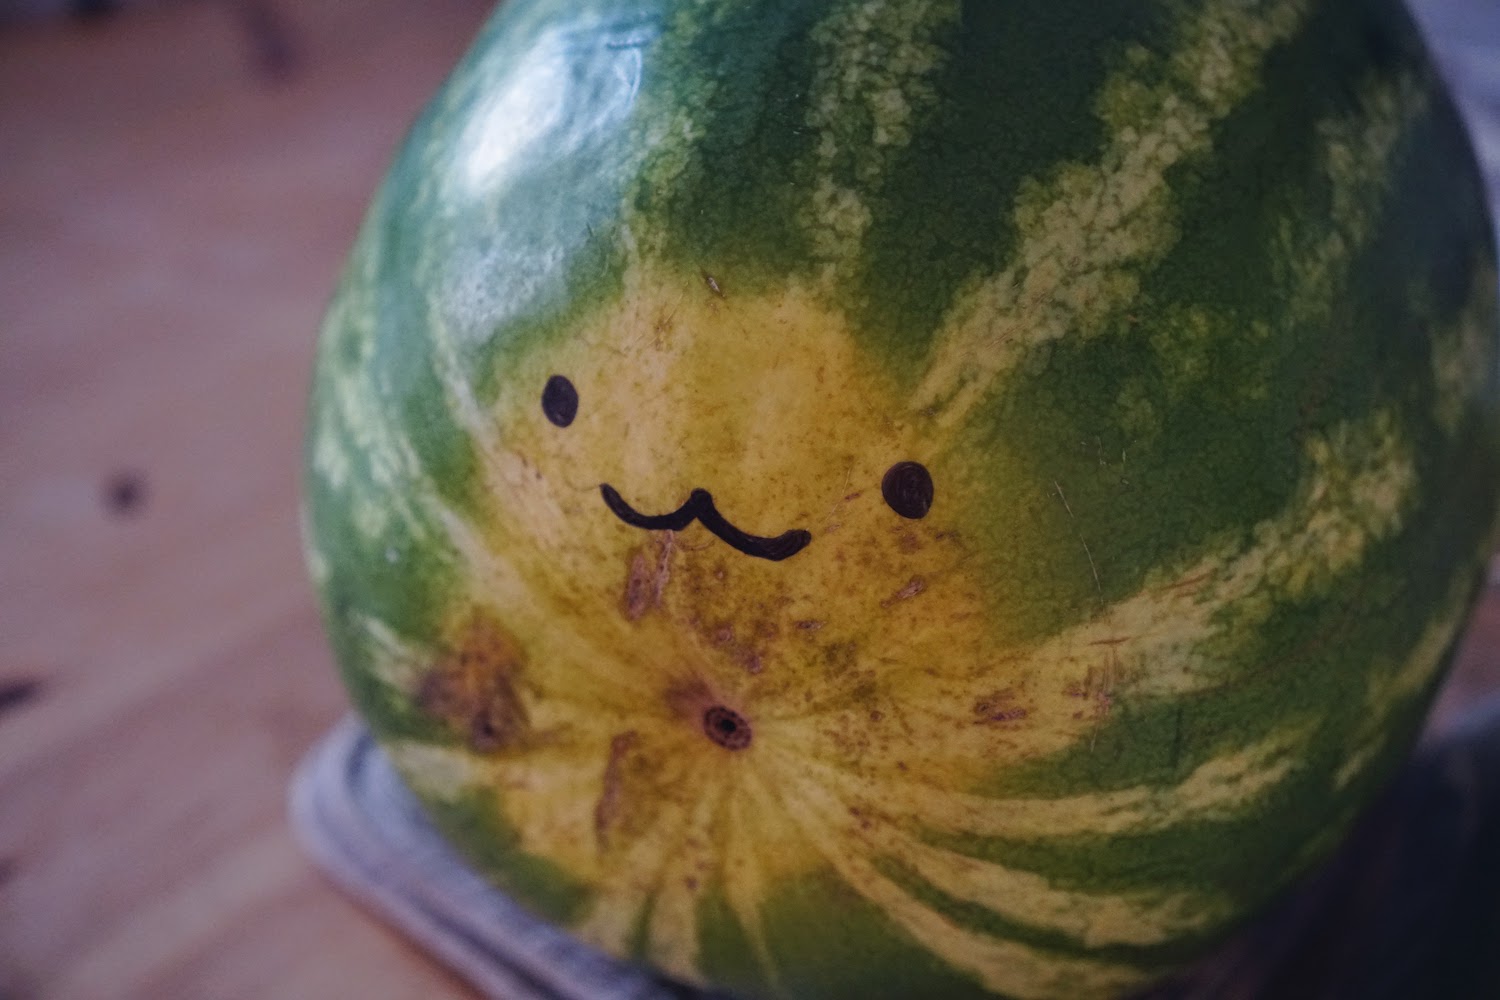 A watermelon with a cute face